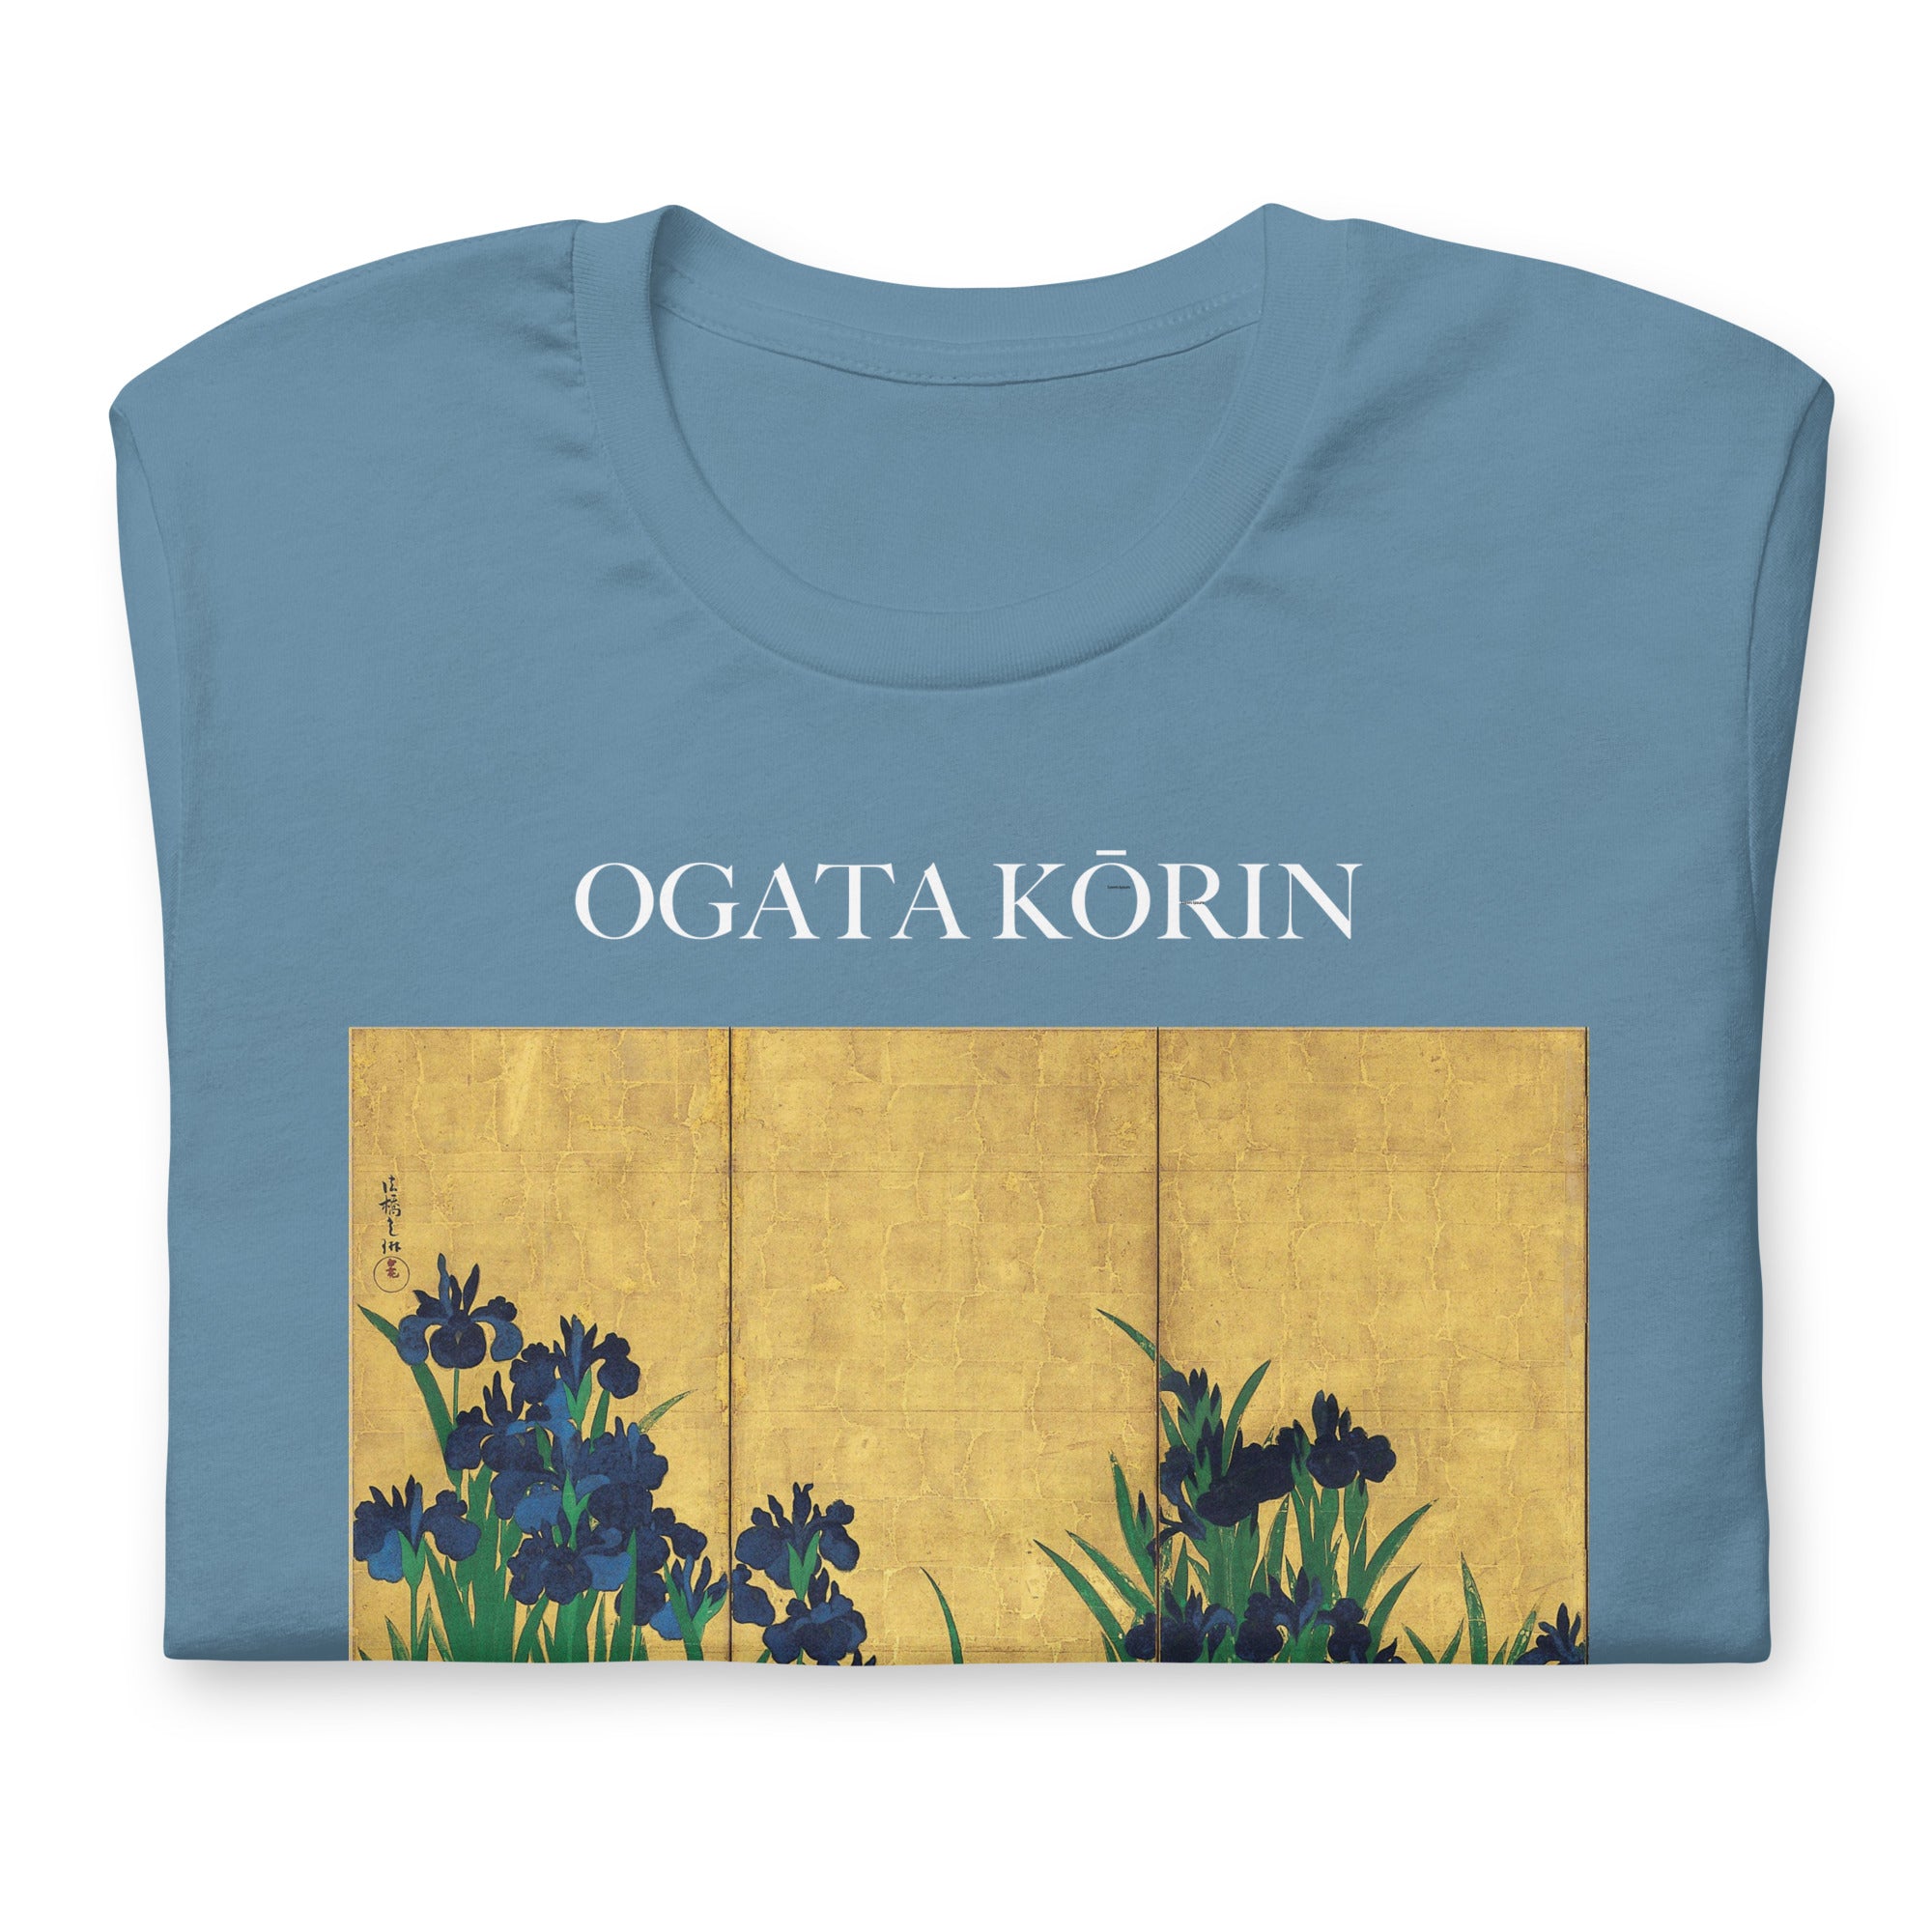 Ogata Kōrin 'Irises Screen' Famous Painting T-Shirt | Unisex Classic Art Tee